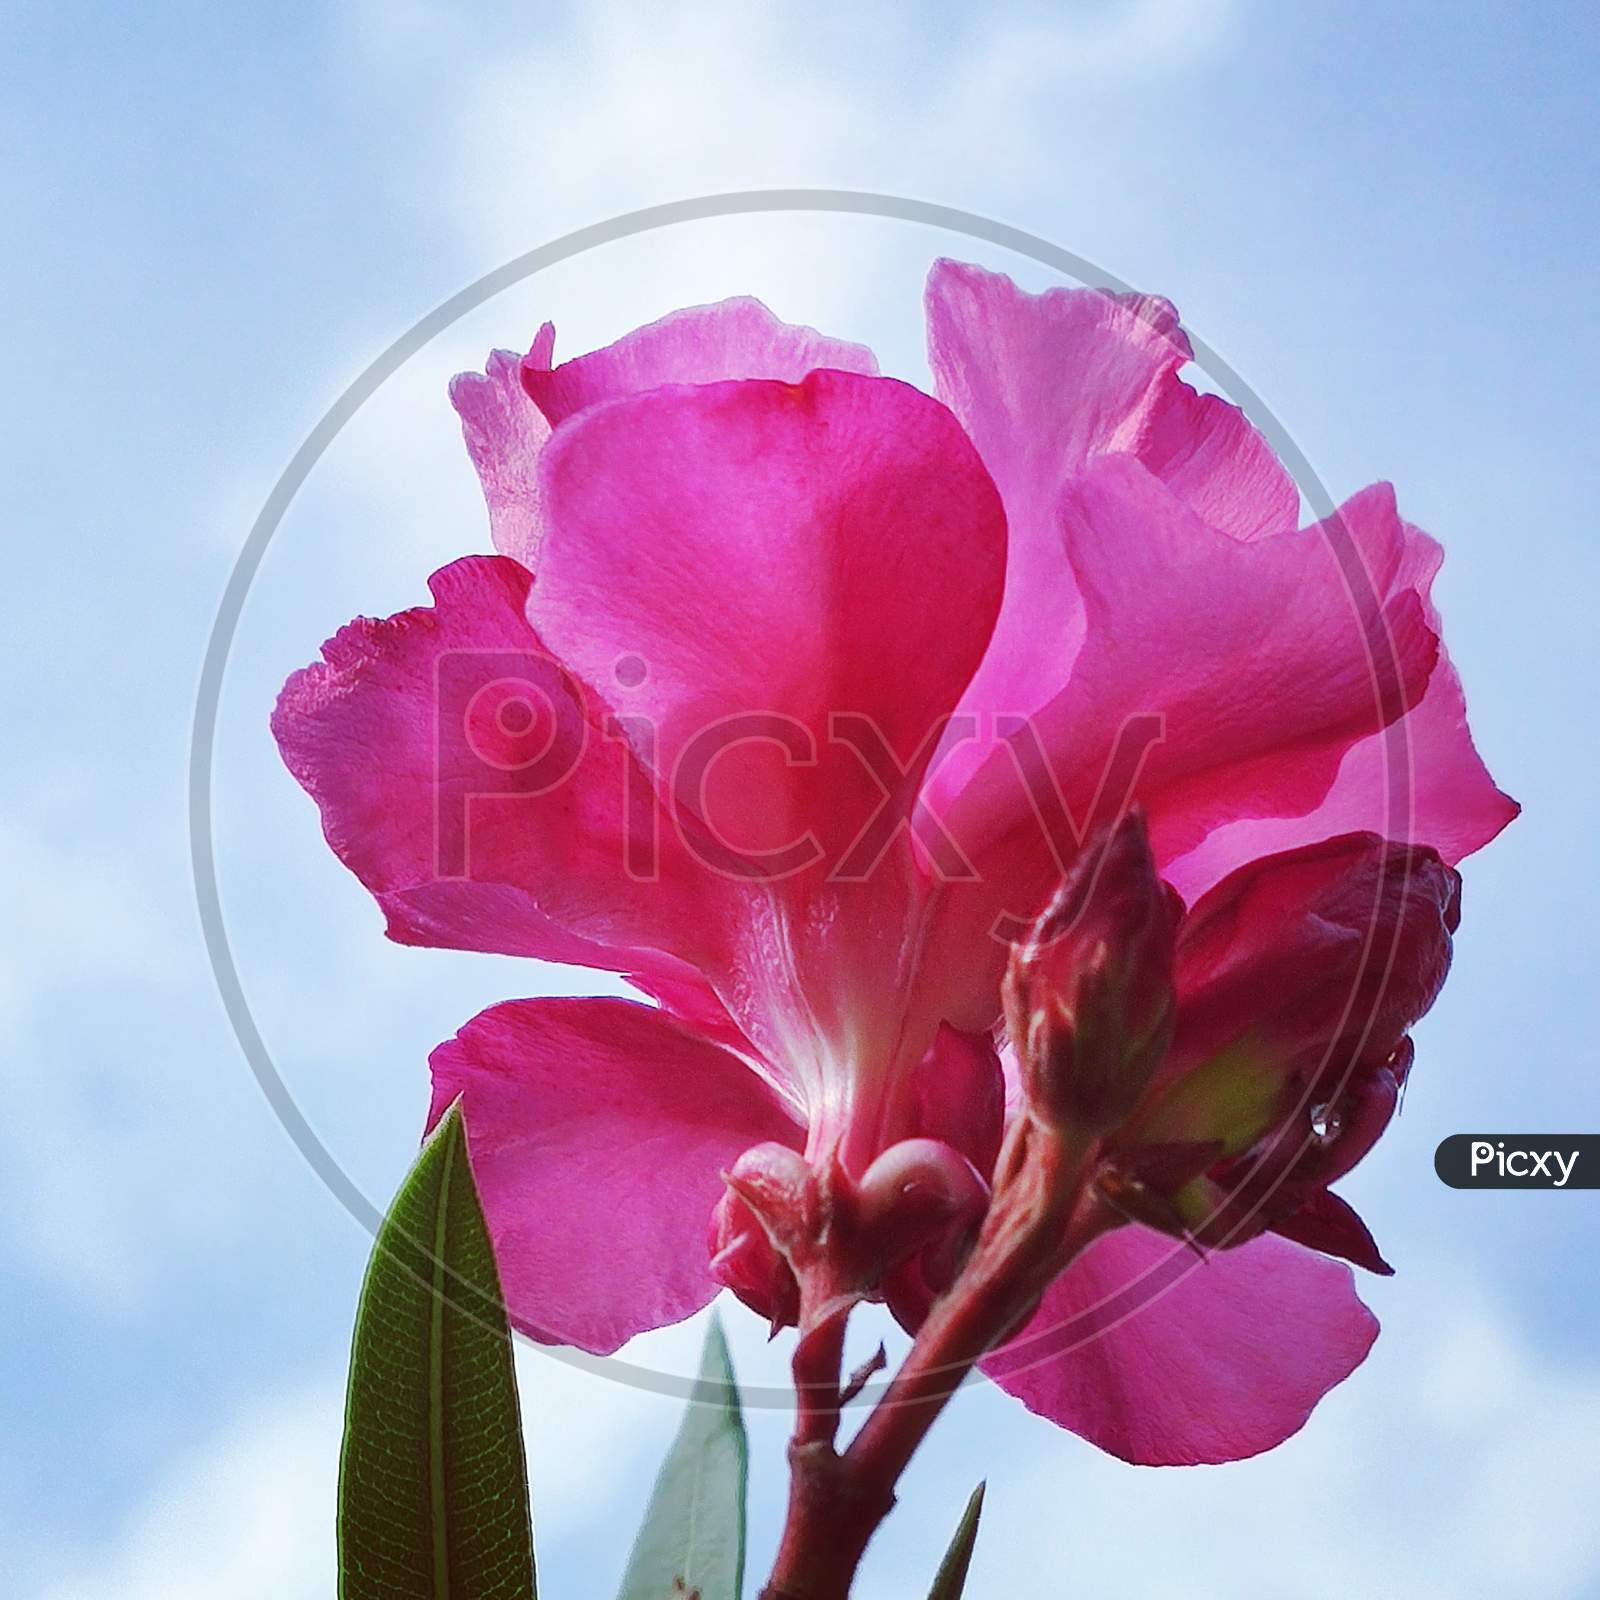 Mesmerizing pink flowers